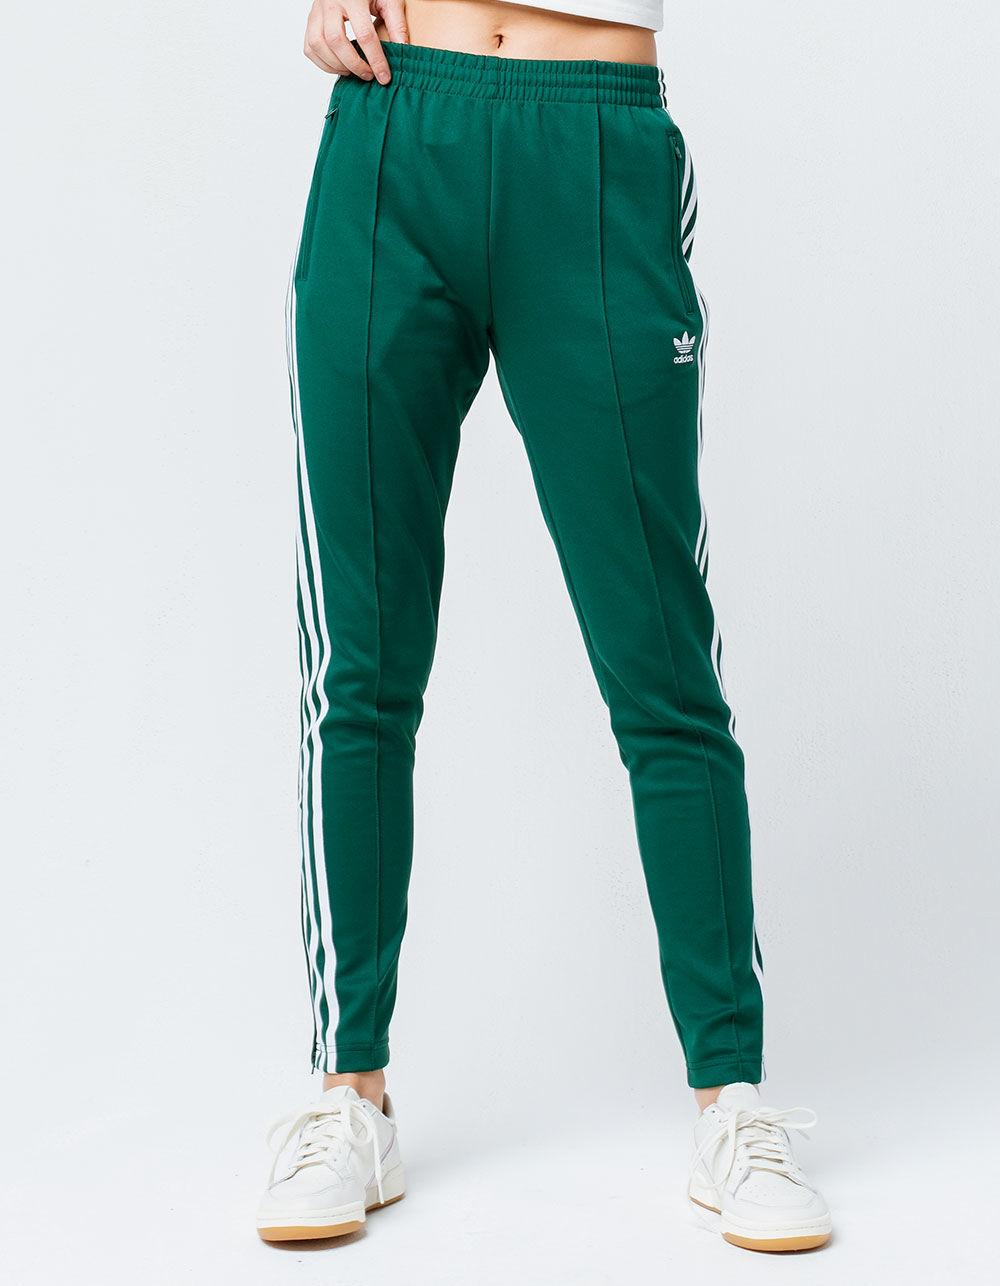 Buy > adidas green pants > in stock